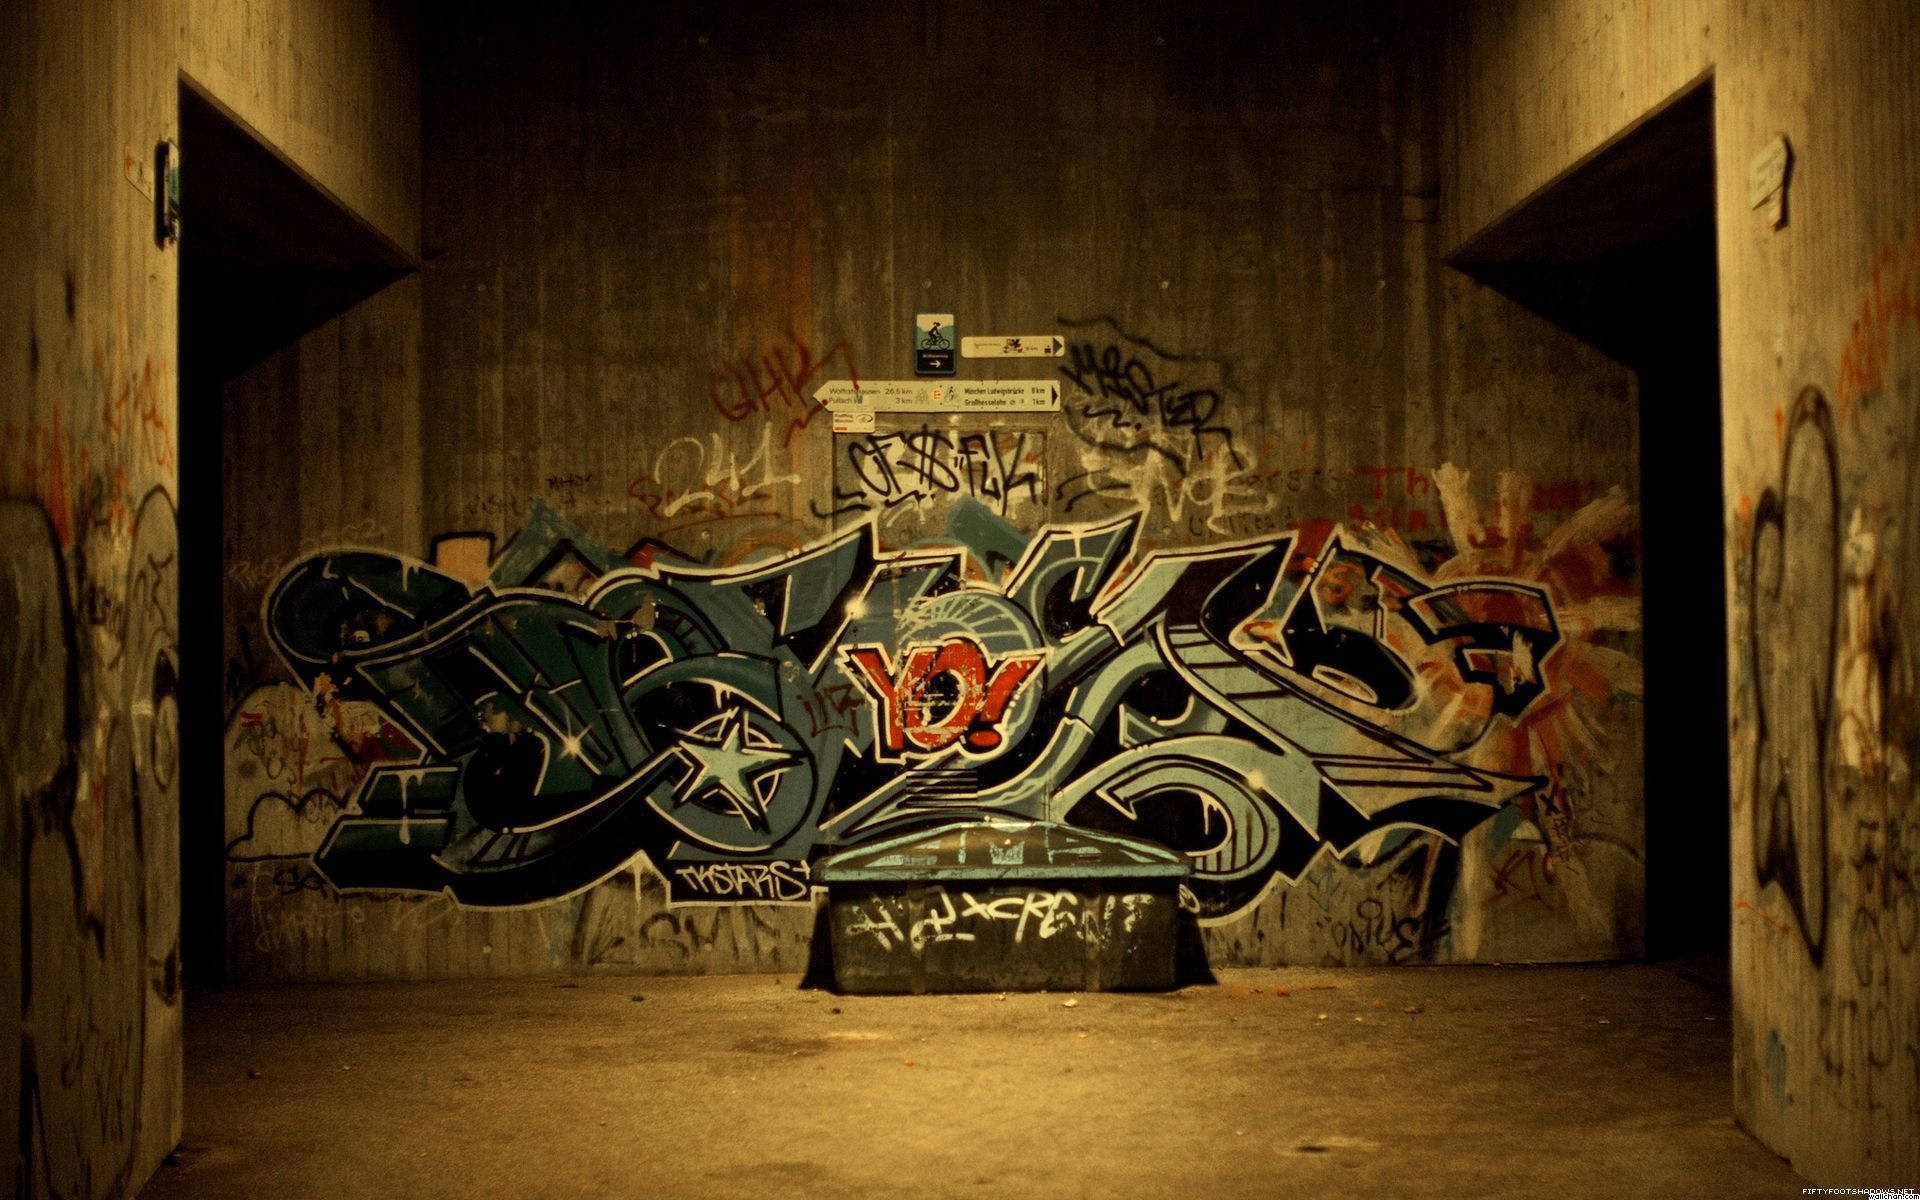 Graffiti wall background editorial stock photo Image of backdrop  24661318